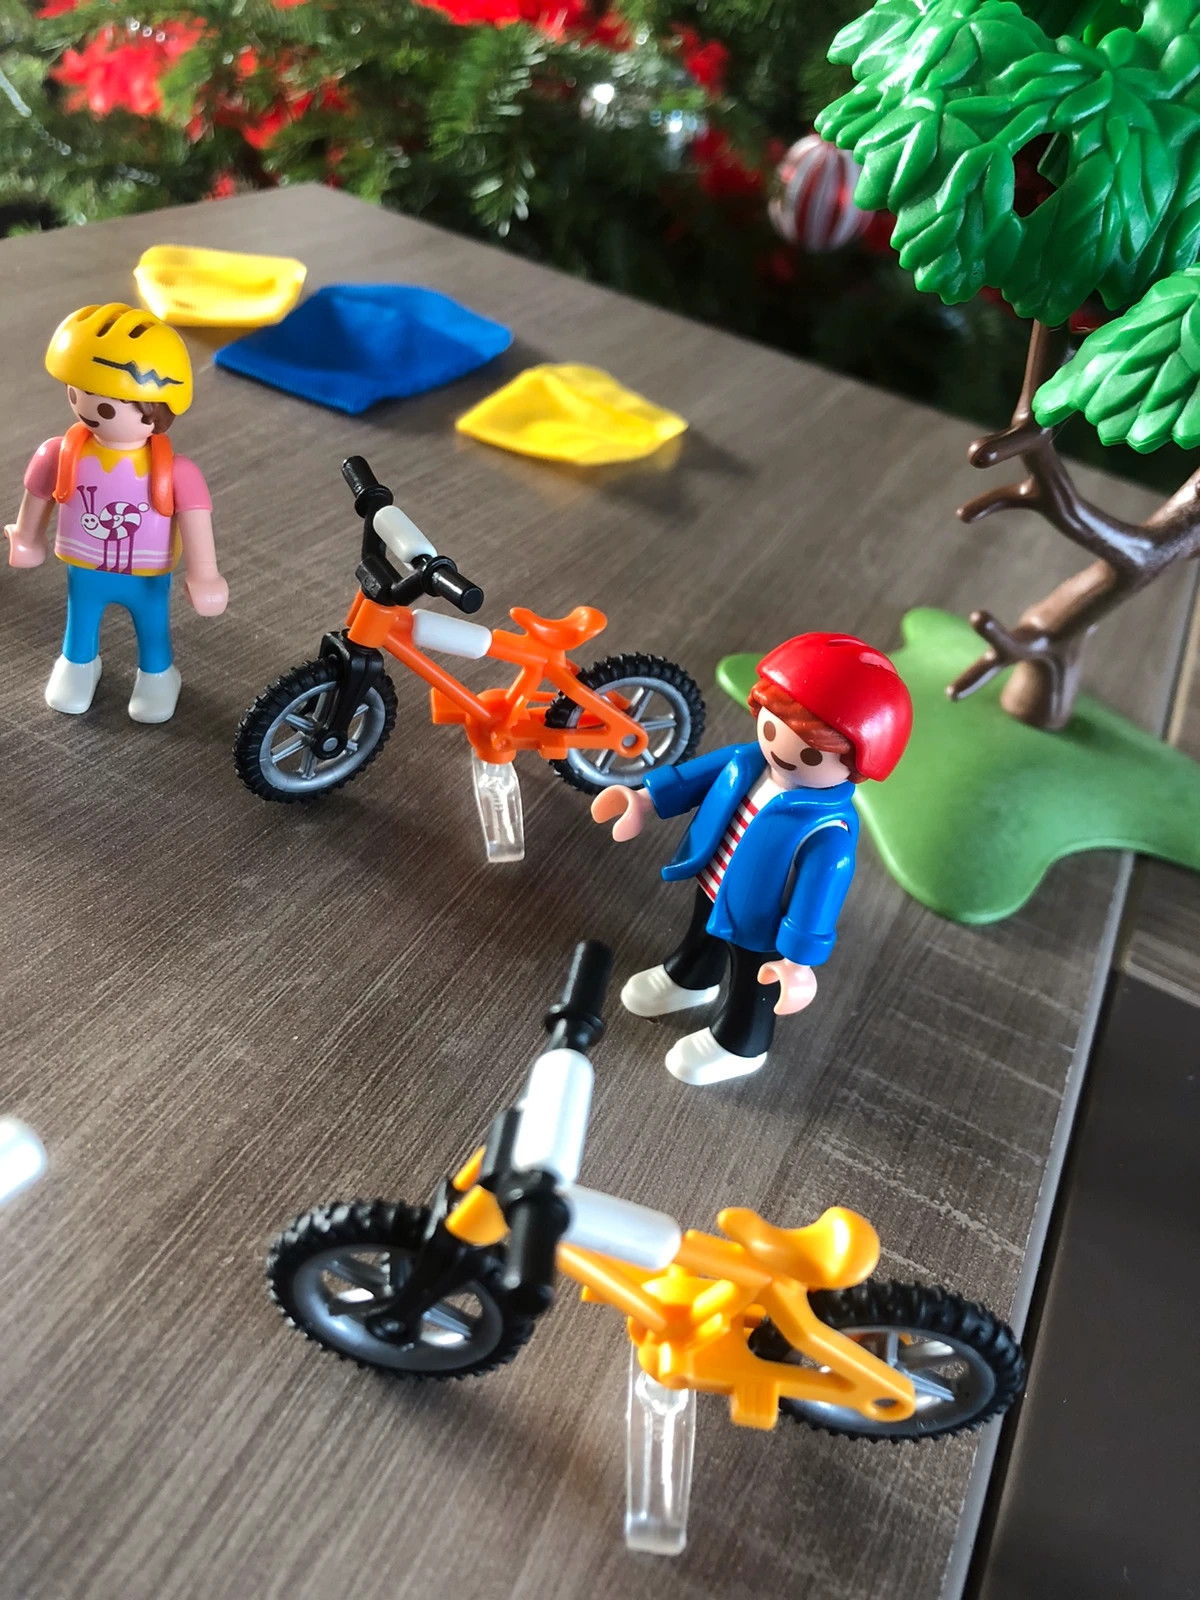 vélo camping familial de 6890 - Playmobil - Playmobileros - Tienda